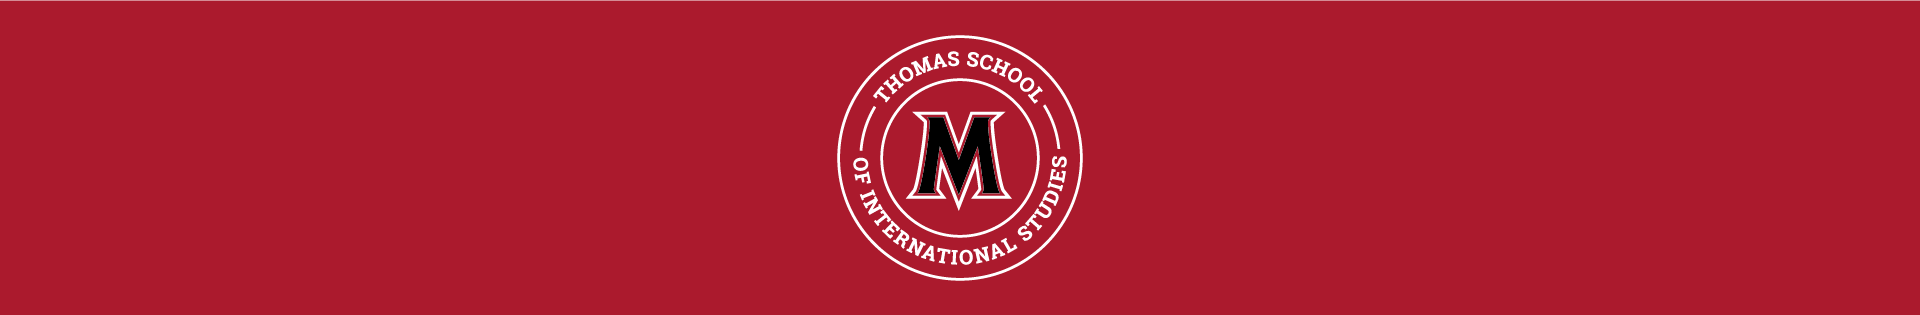 Thomas School of International Studies